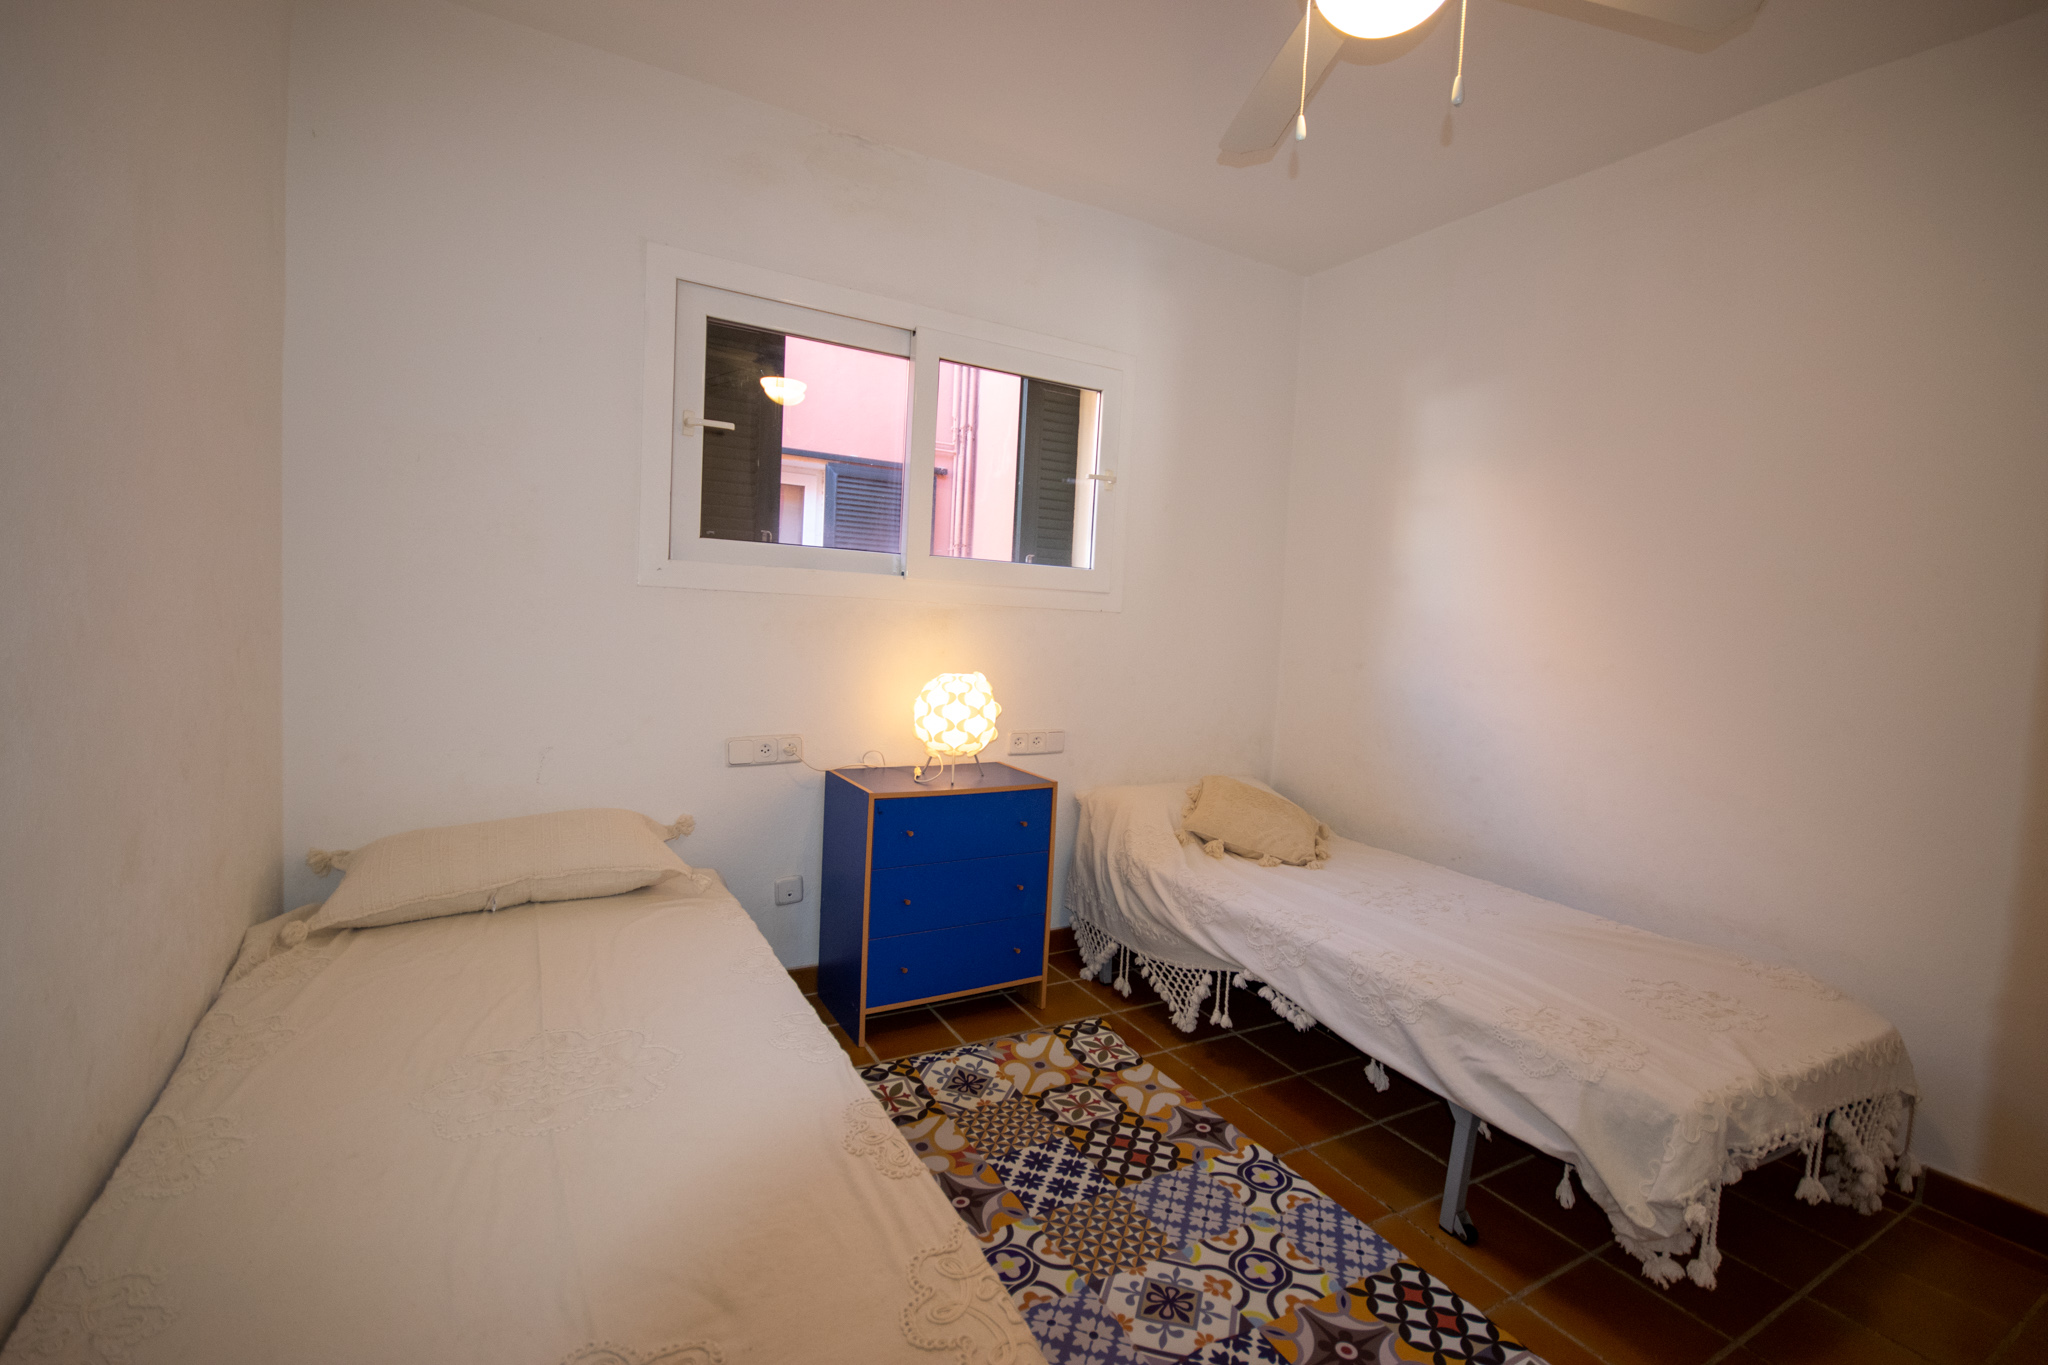 2-bedroom double bedroom flat with terrace for sale in Es Mercadal